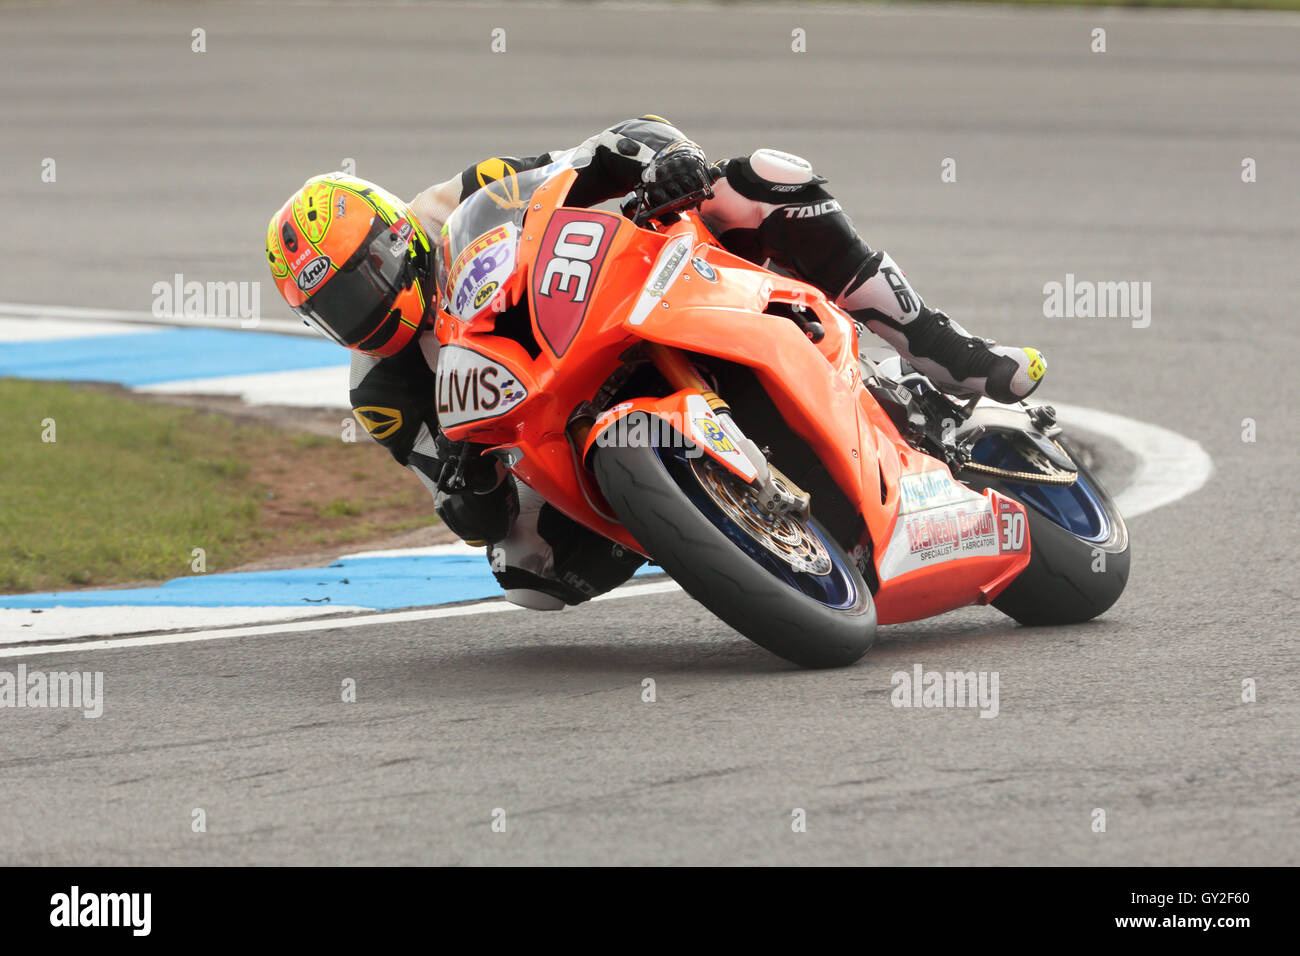 Motorcycle racing Pirelli Superstock. Stock Photo